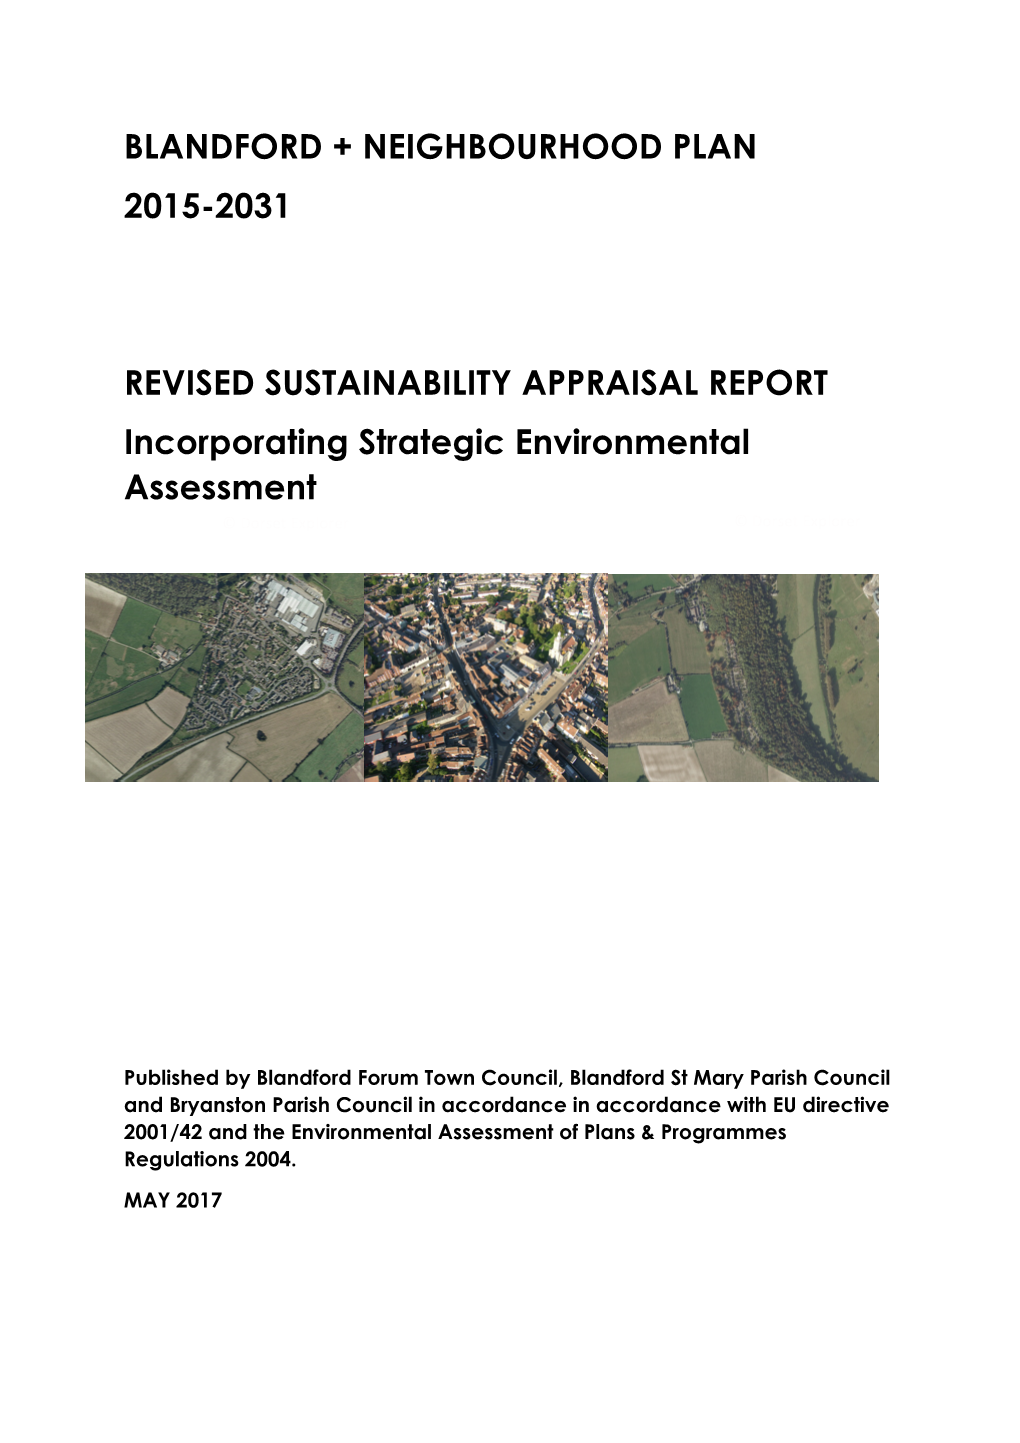 Blandford + Neighbourhood Plan 2015-2031 Revised Sustainability Appraisal (Incorporating Strategic Environmental Assessment) May 2017